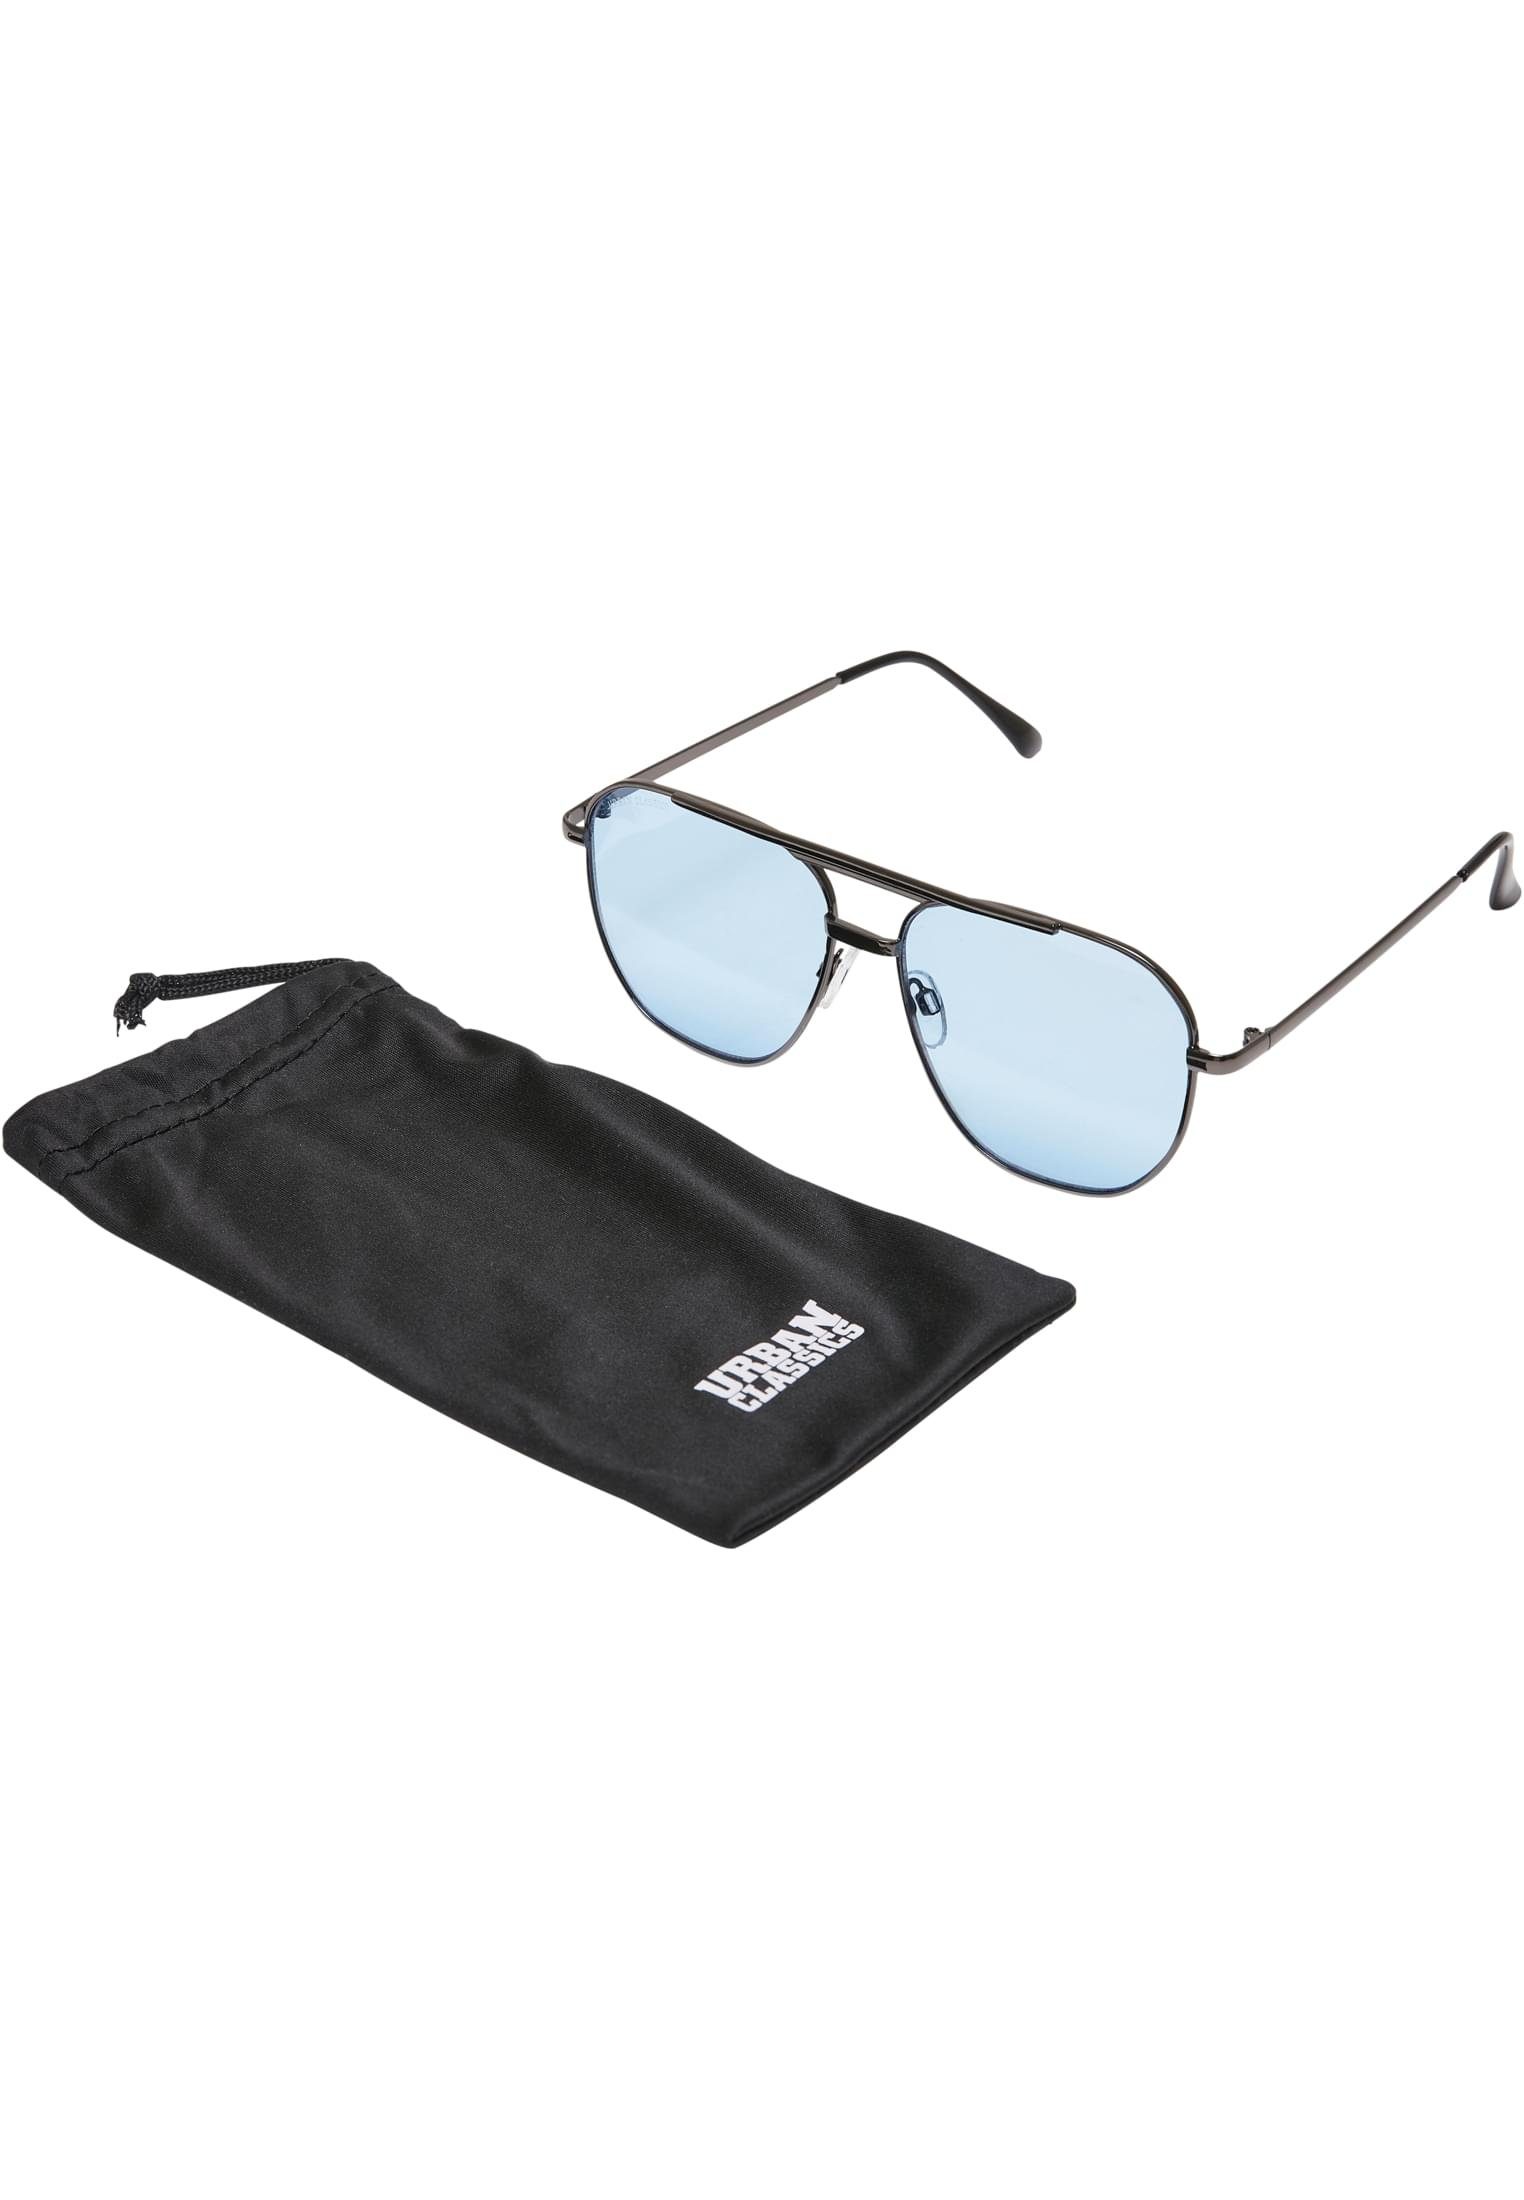 URBAN CLASSICS Sonnenbrille Unisex Sunglasses Manila gunmetal/batikblue